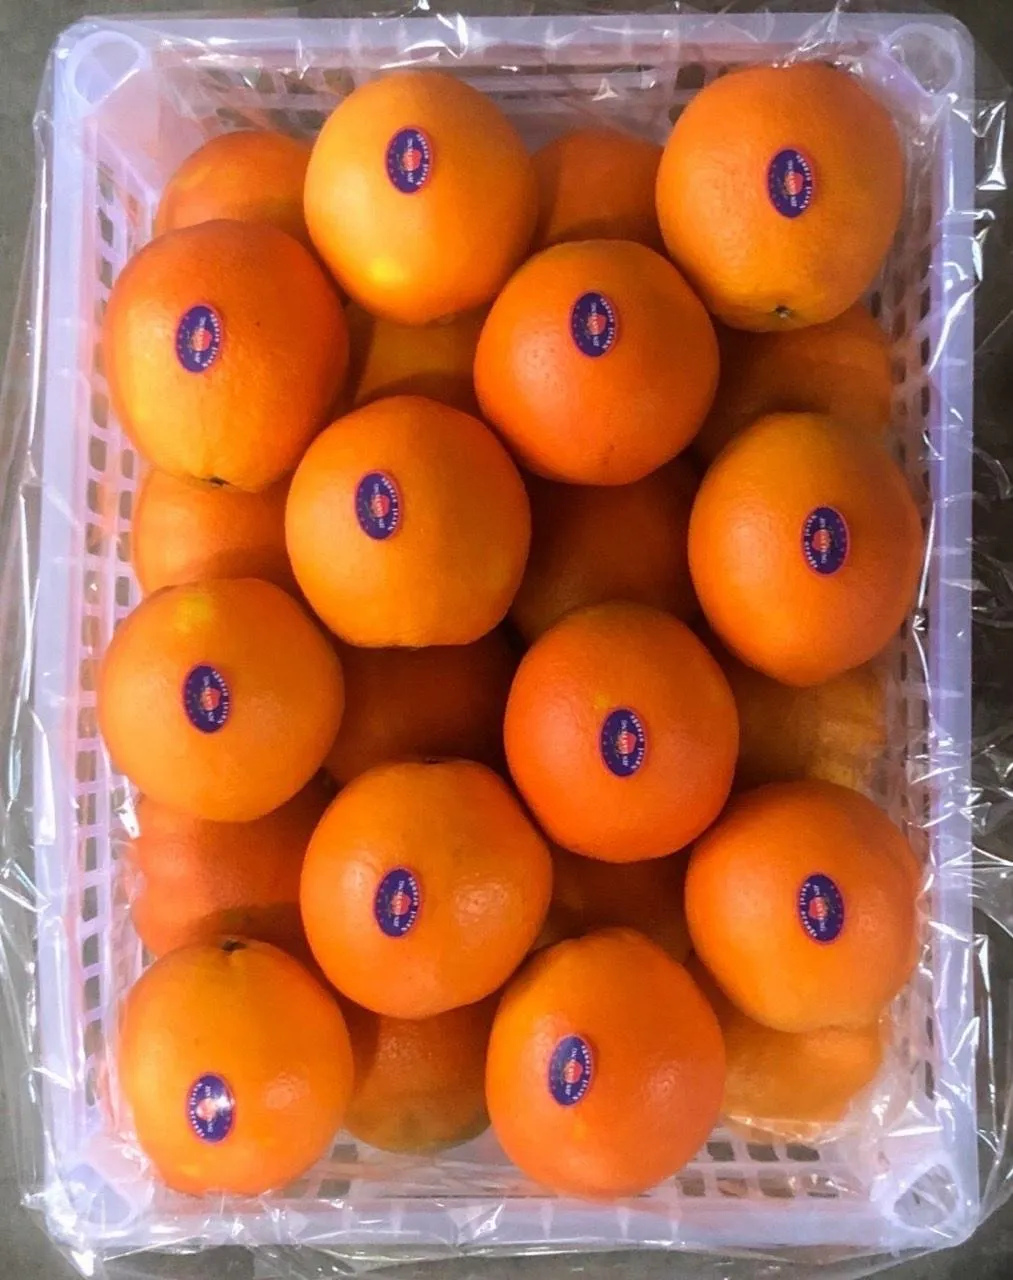 Red navel orange vs blood orange | Reasonable price, great purchase